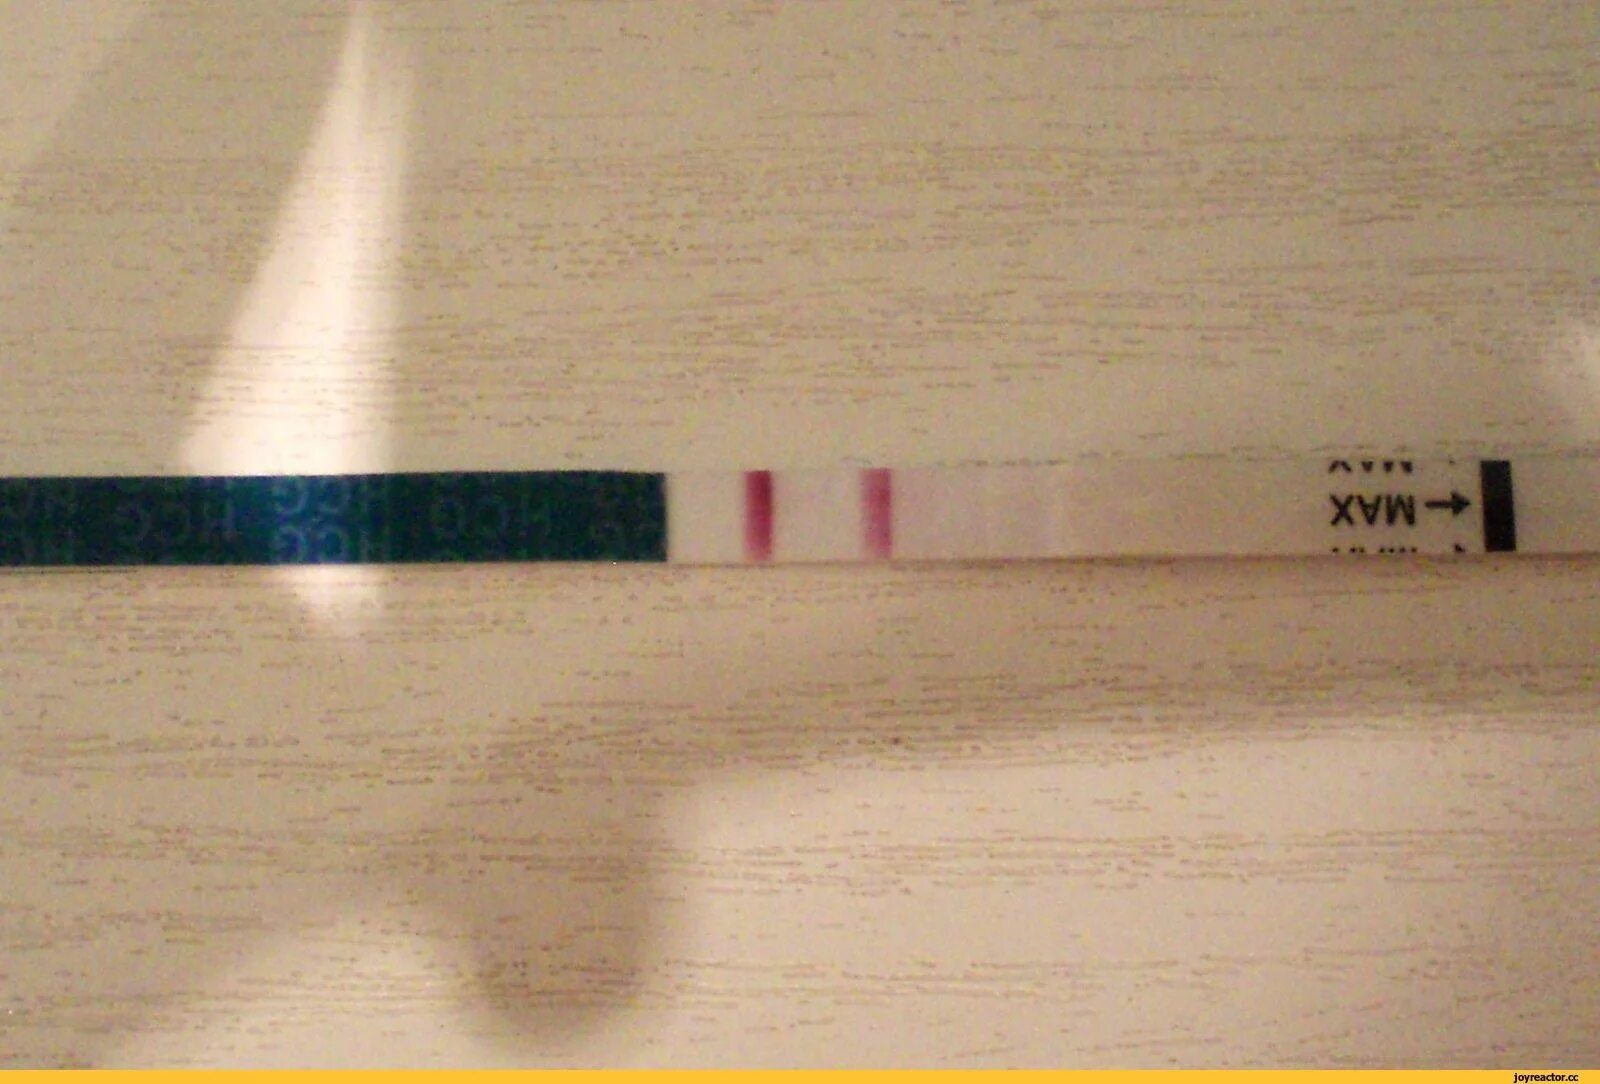 Тест положительный фото полоски. Тест на беременность 2 poloska. Тест на беременность с 2 тест полосками. Тест на беременность 2 полоски фото. Тест на беременность 2 полосочки.